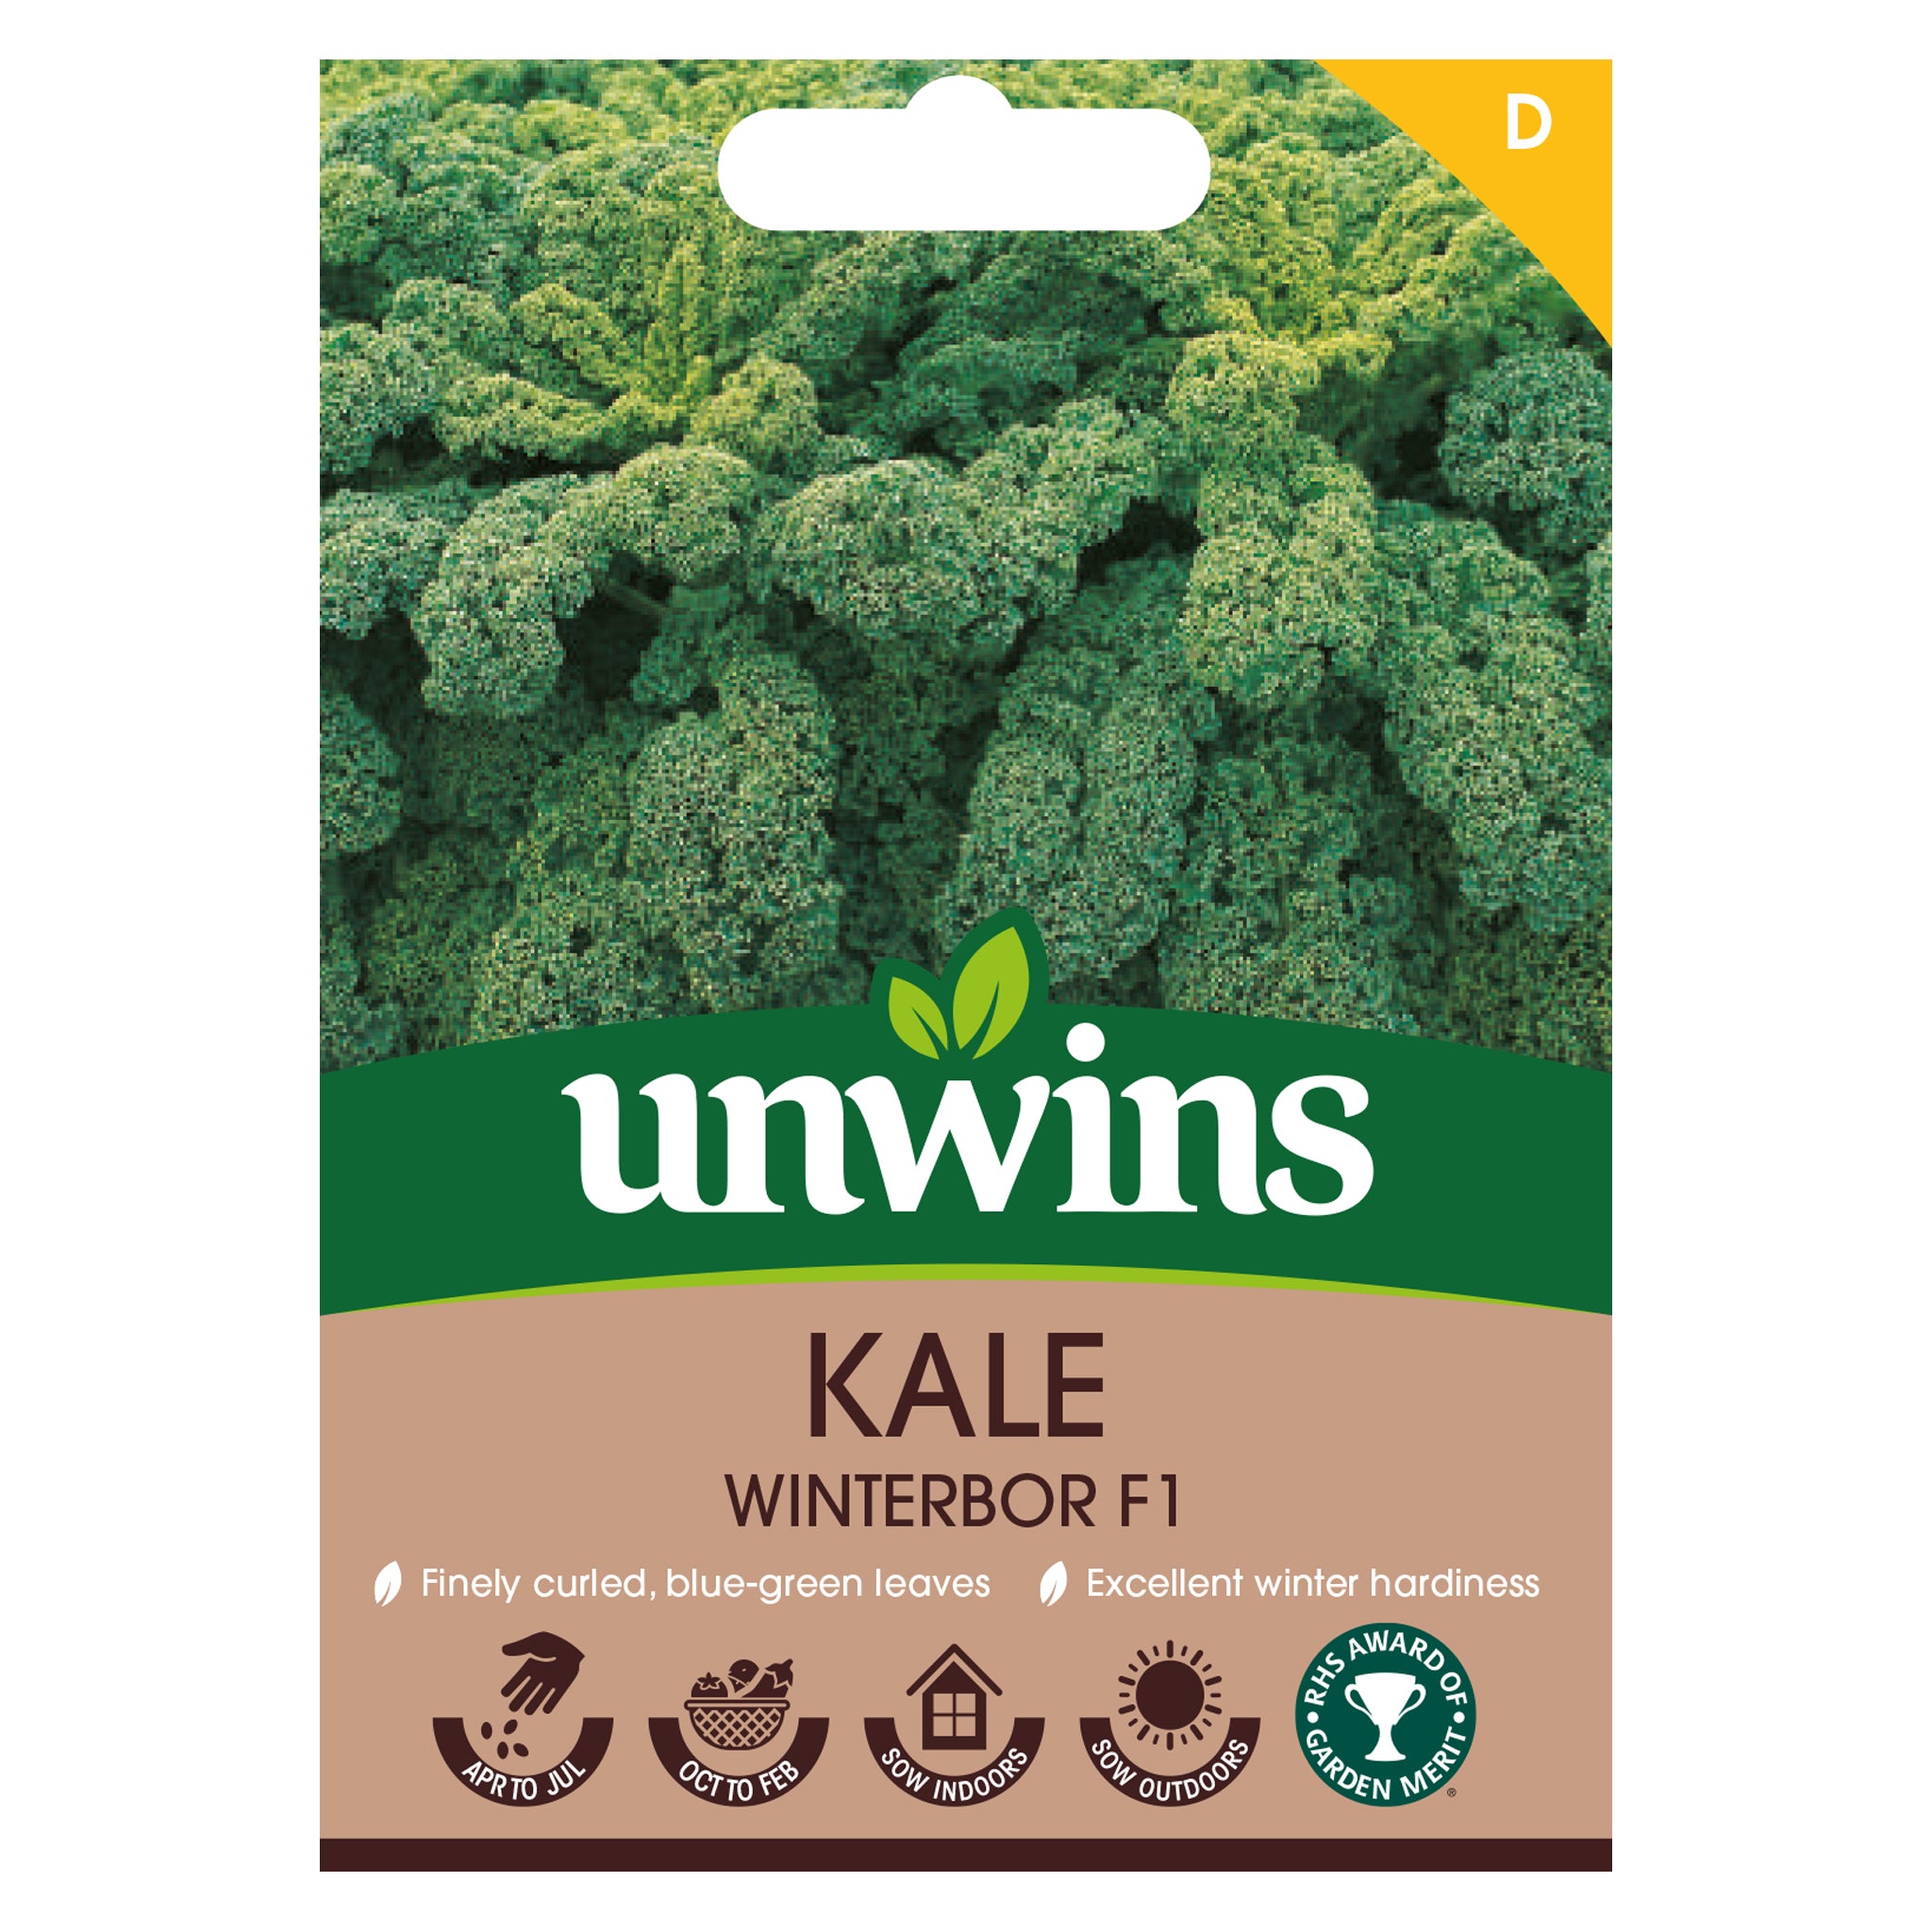 Unwins Kale Winterbor F1 Seeds